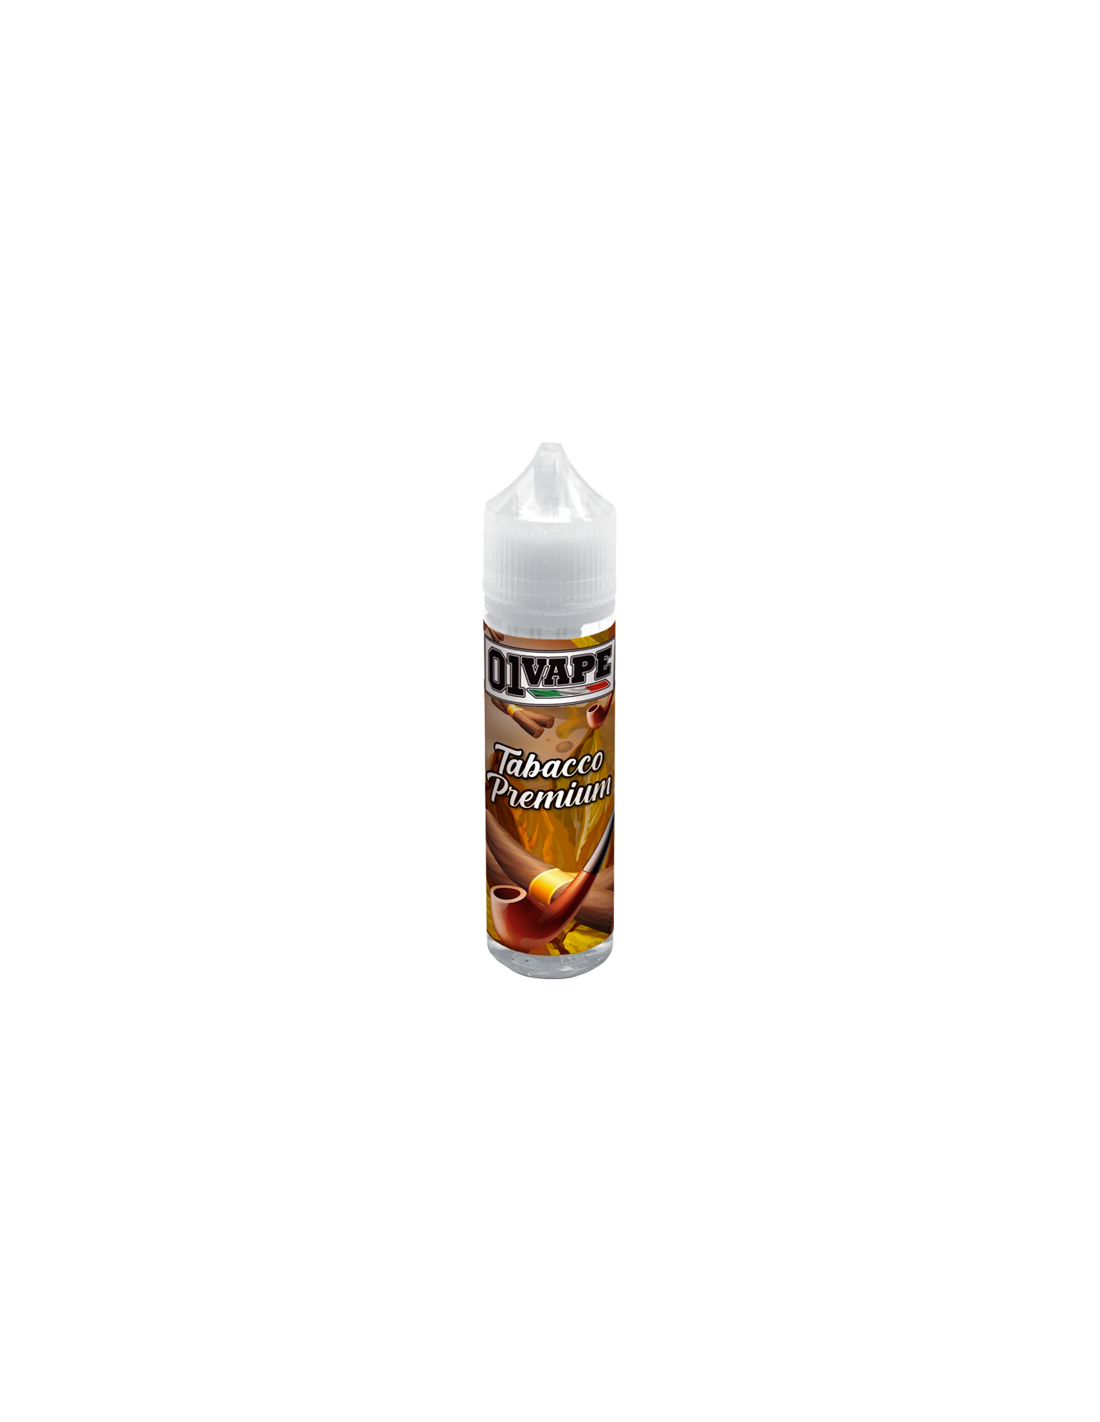 01 Vape Tabacco Premium Liquido Shot 20ml